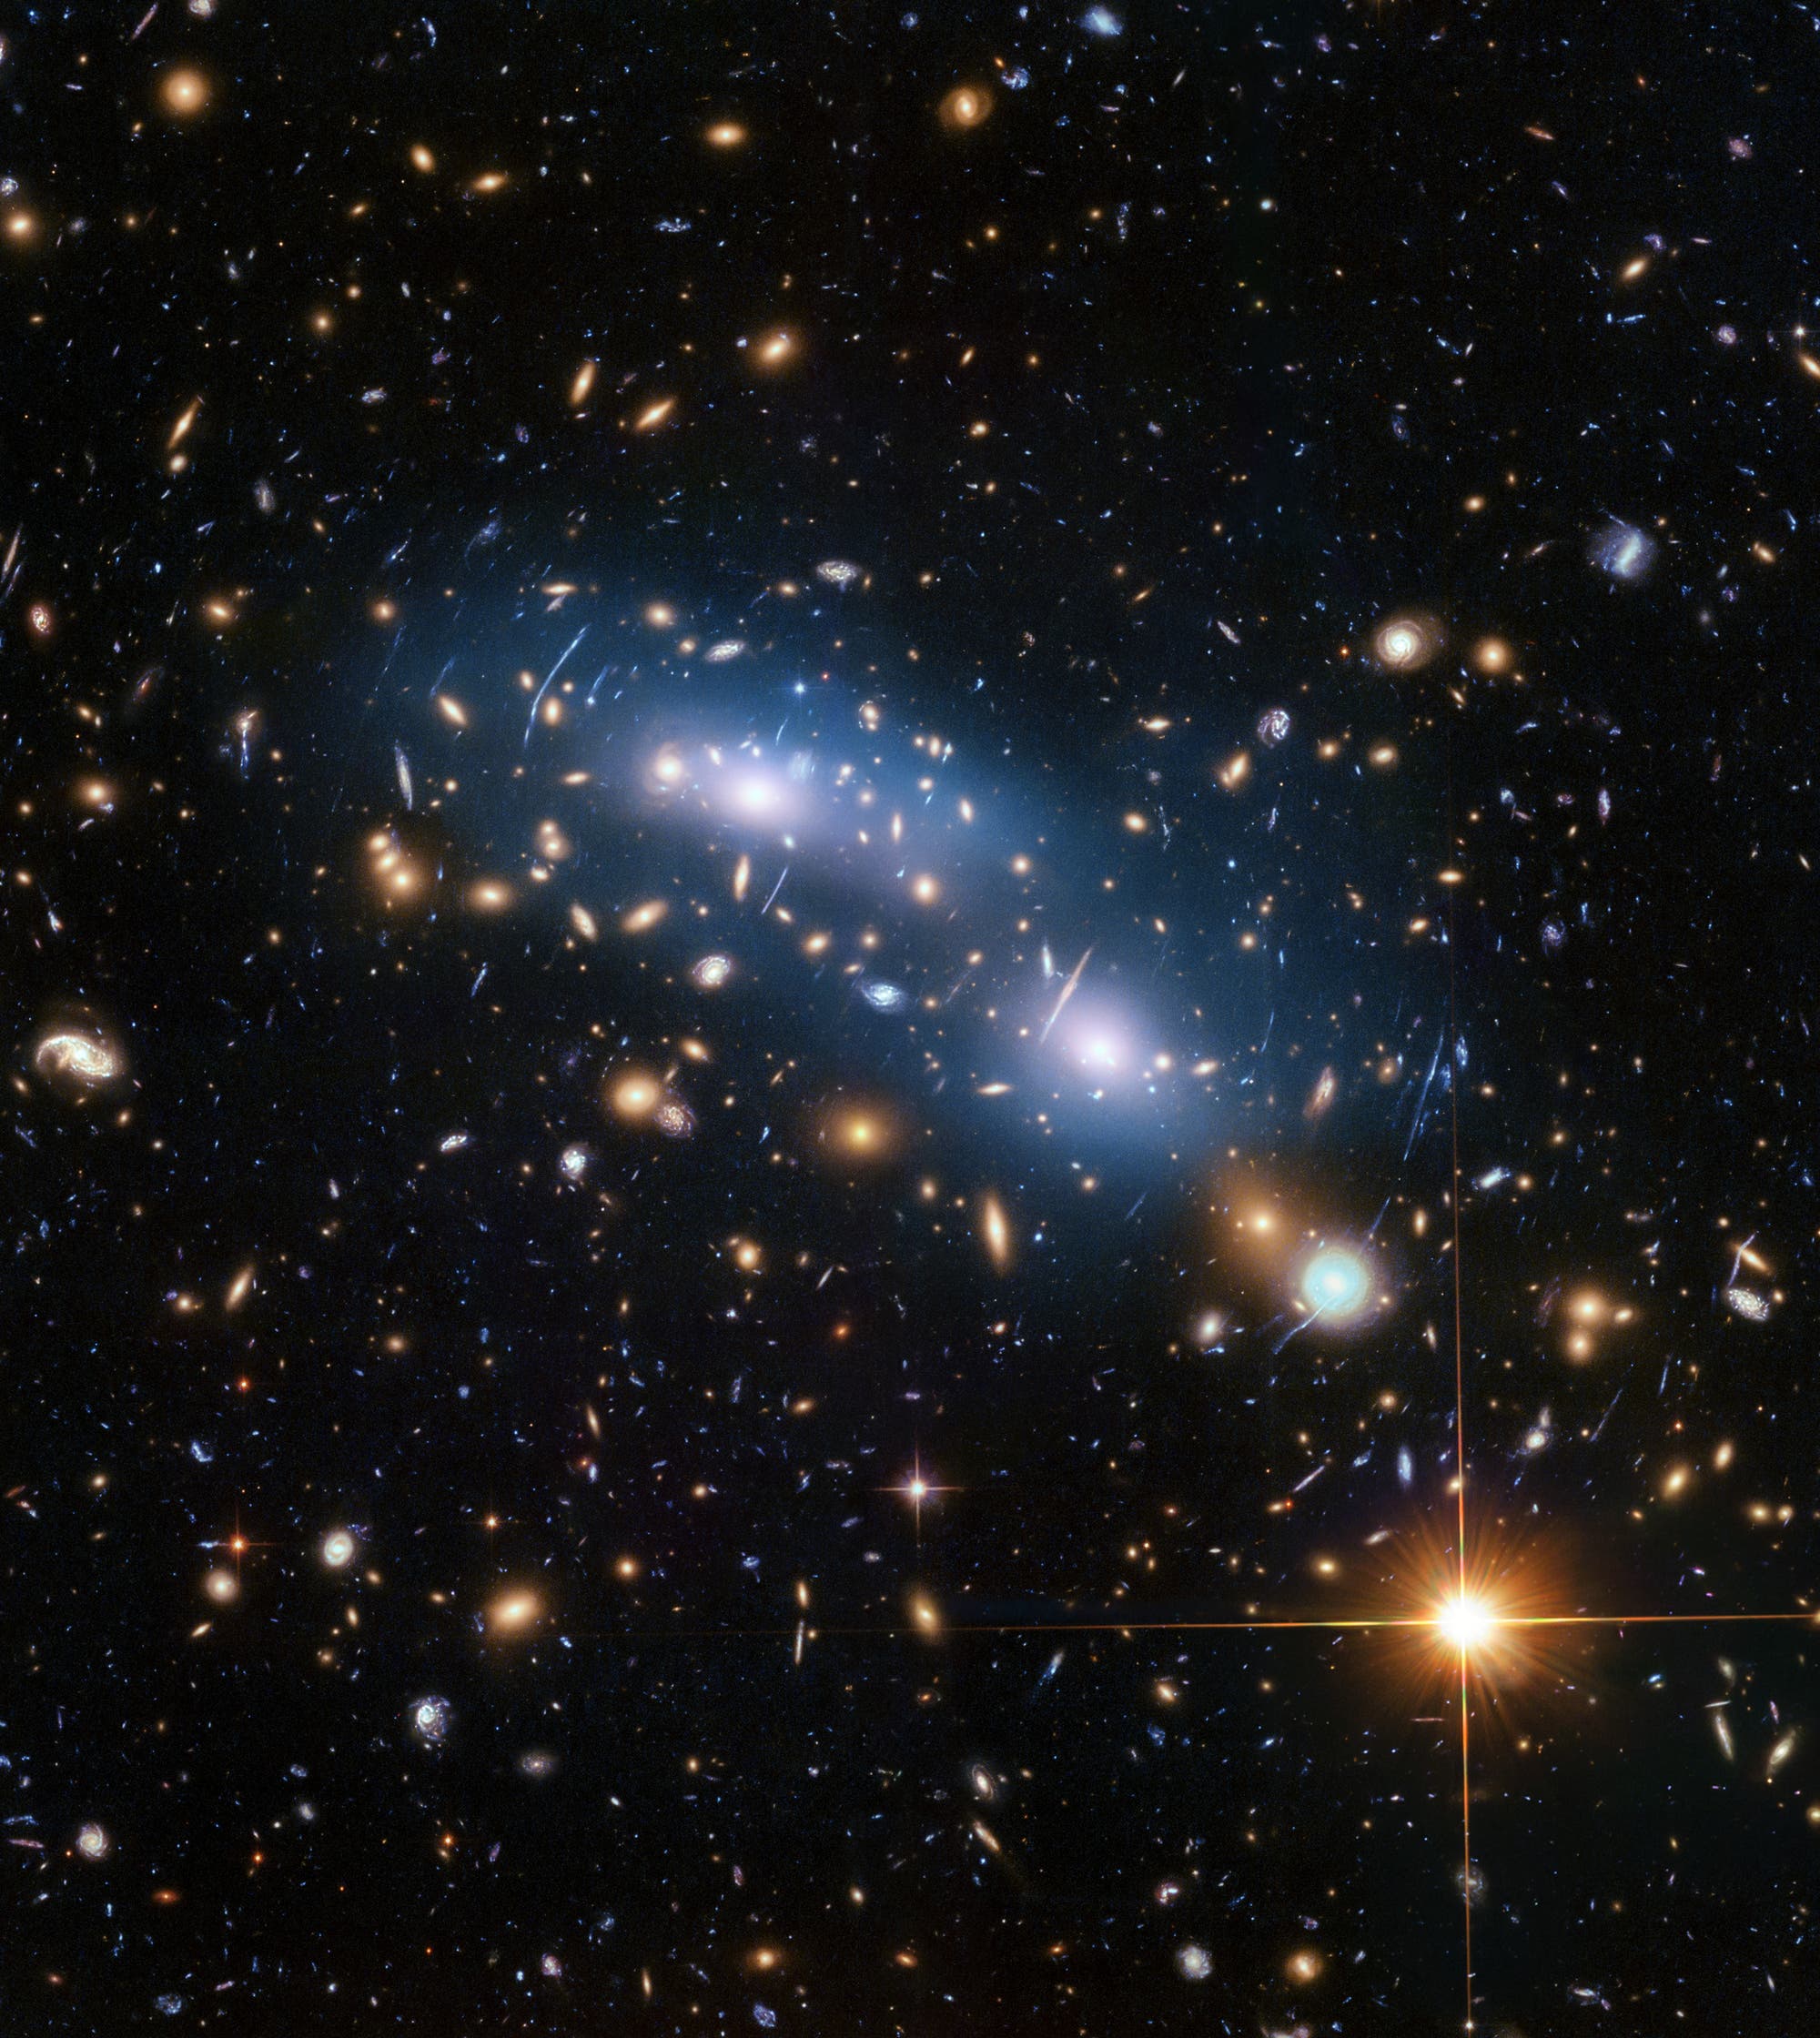 Der Galaxienhaufen MACS J0416.1 – 2403